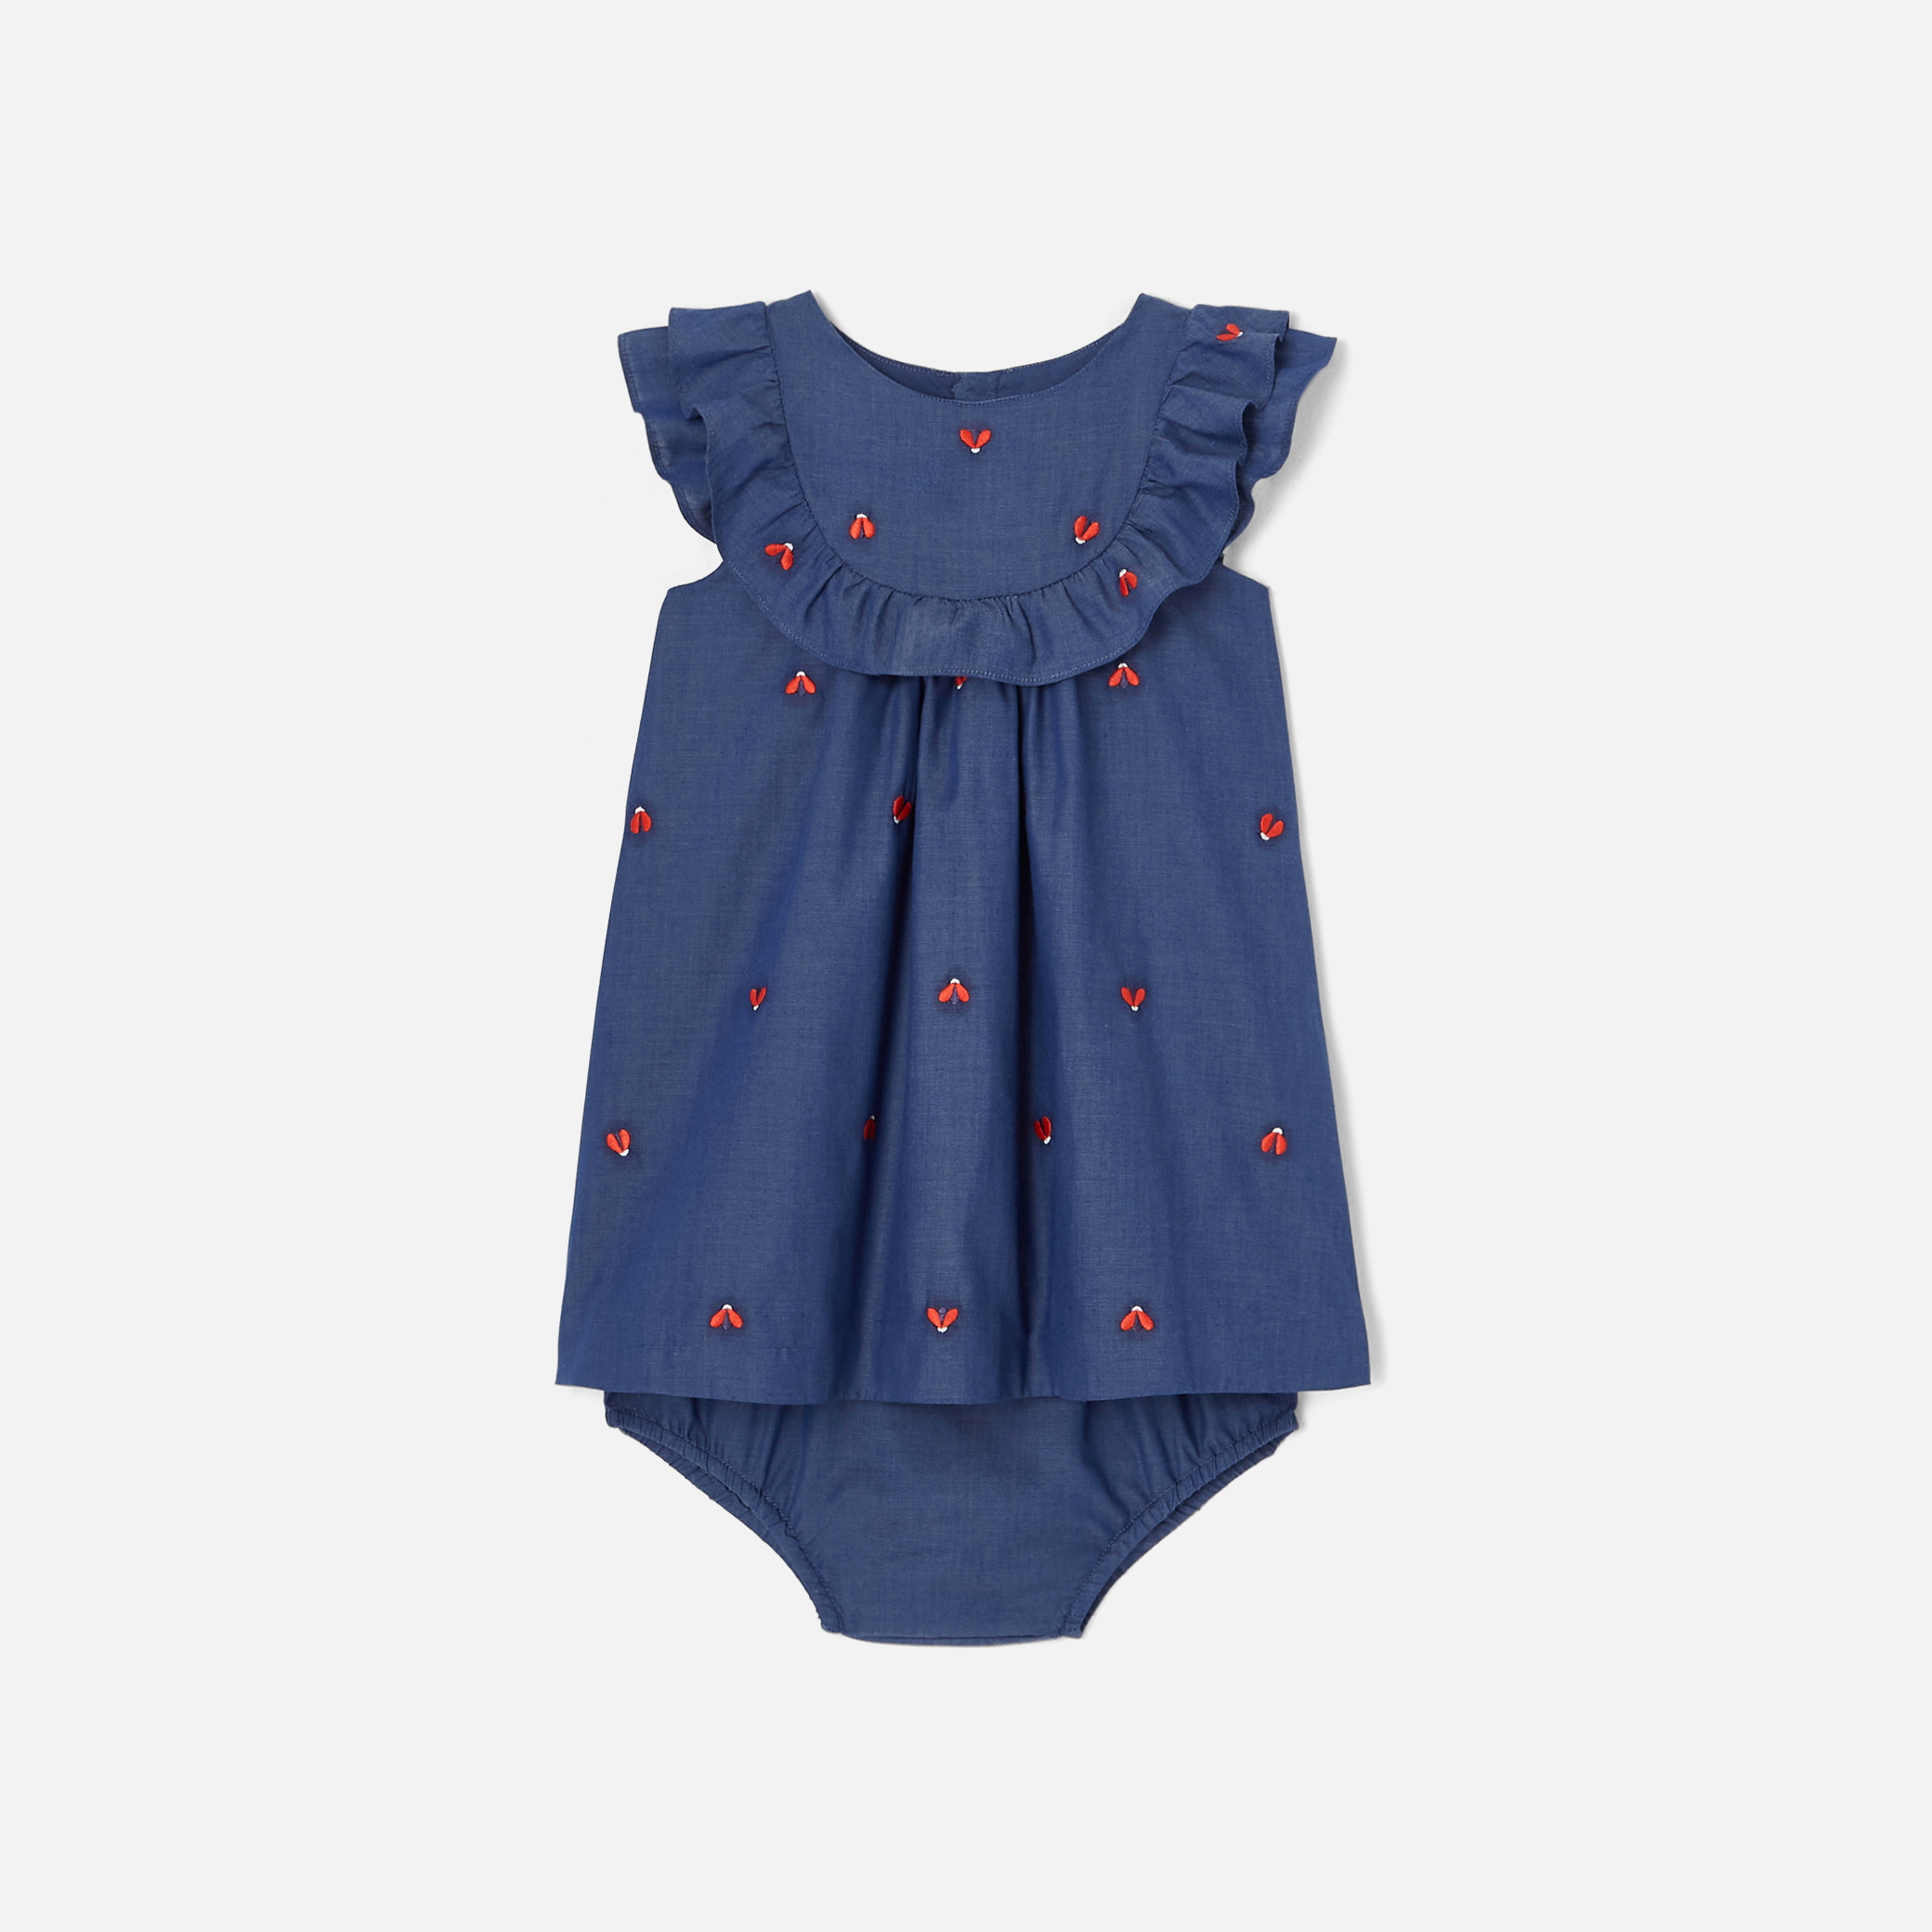 Toddler girl chambray dress